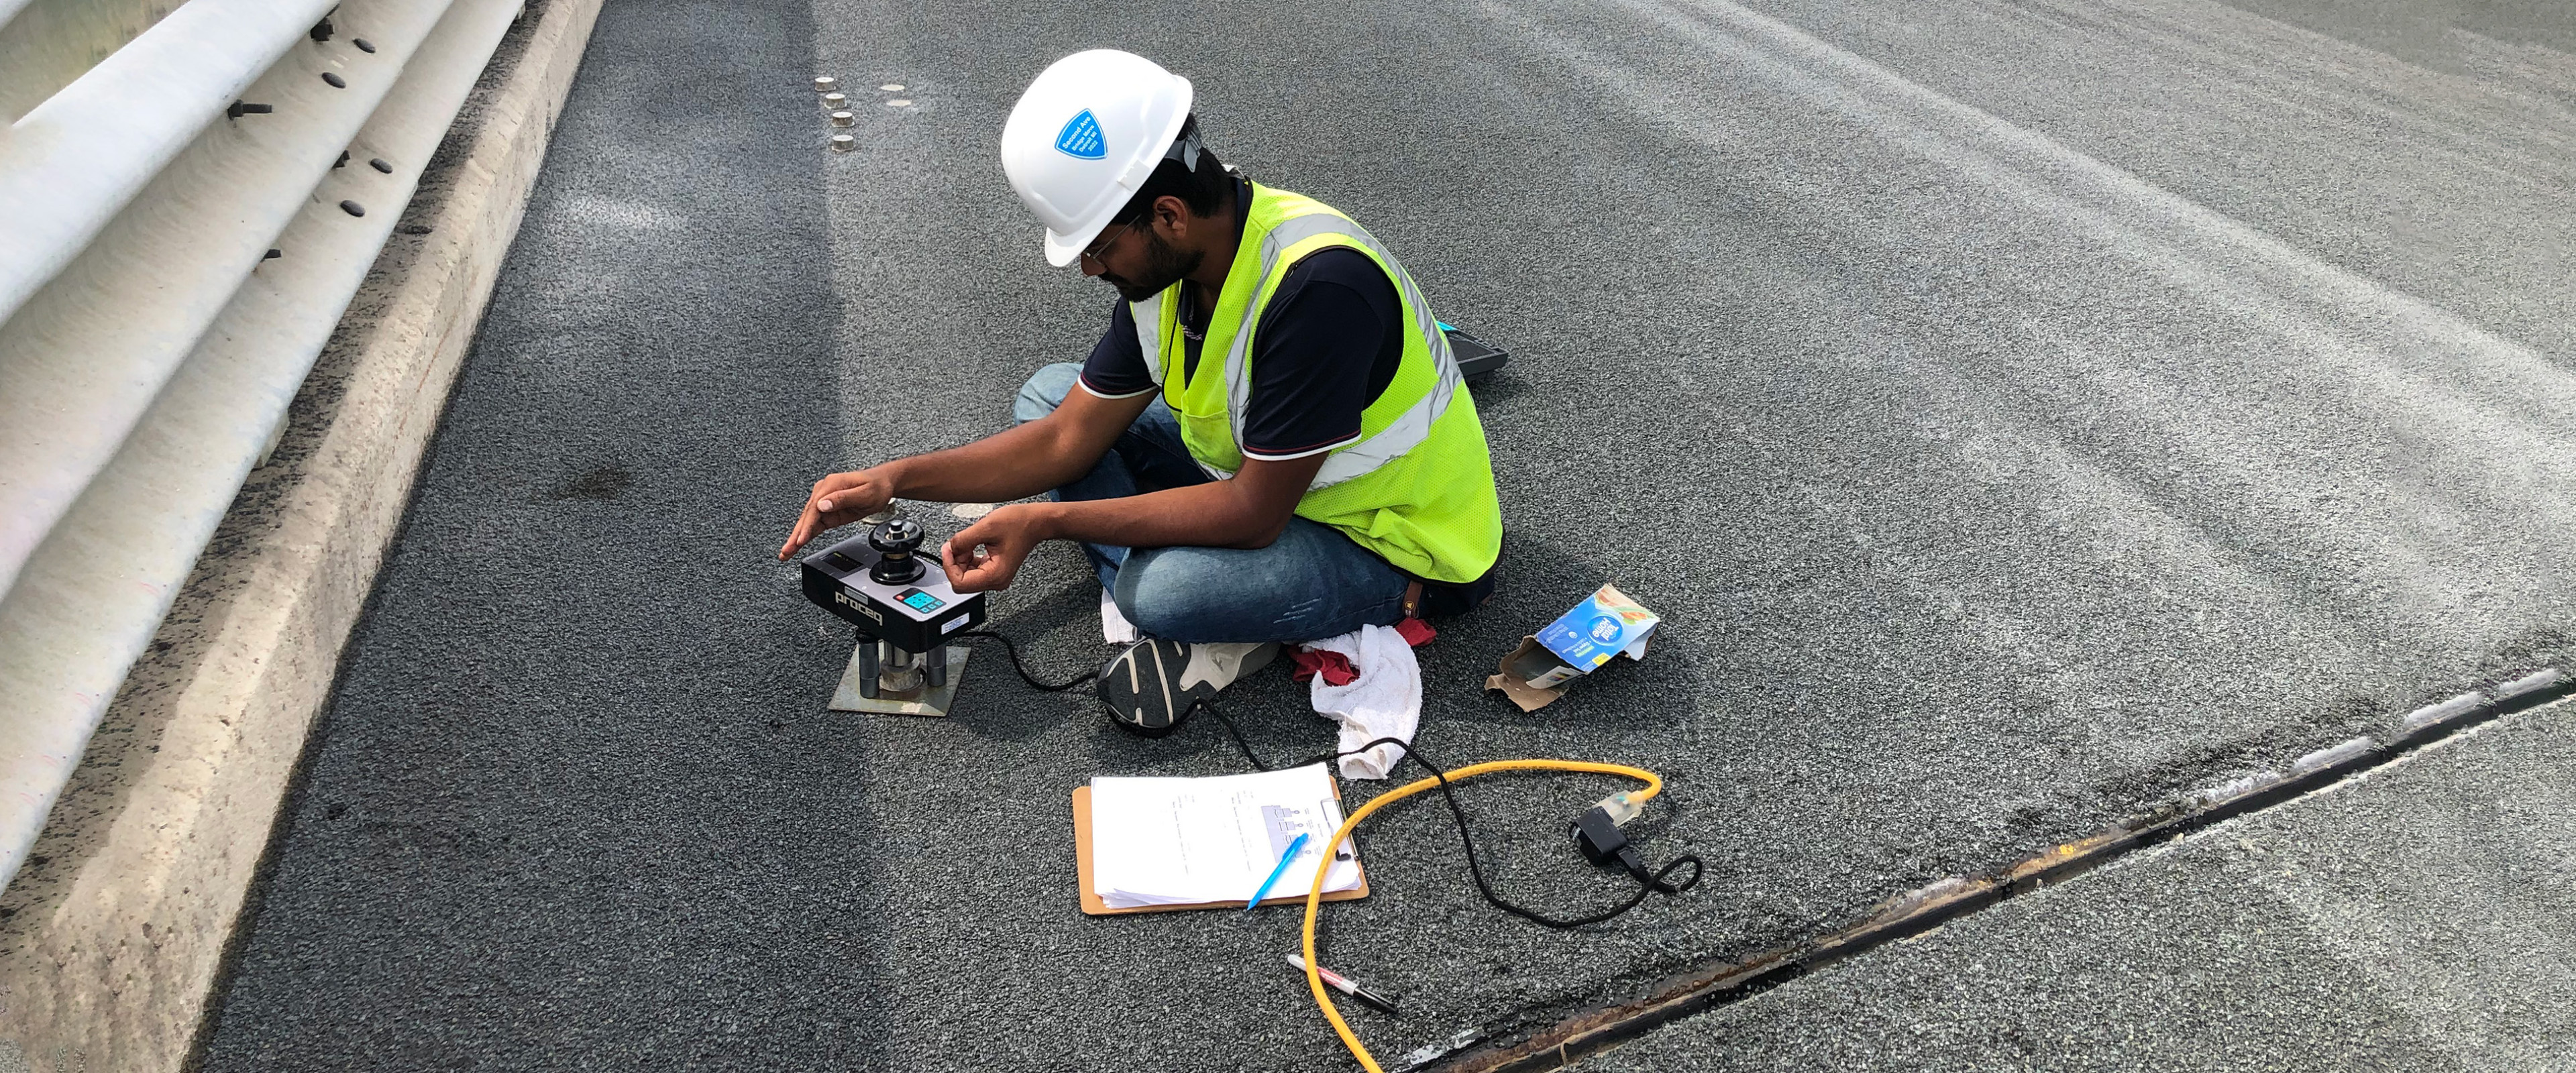 Worker on road installing sensors